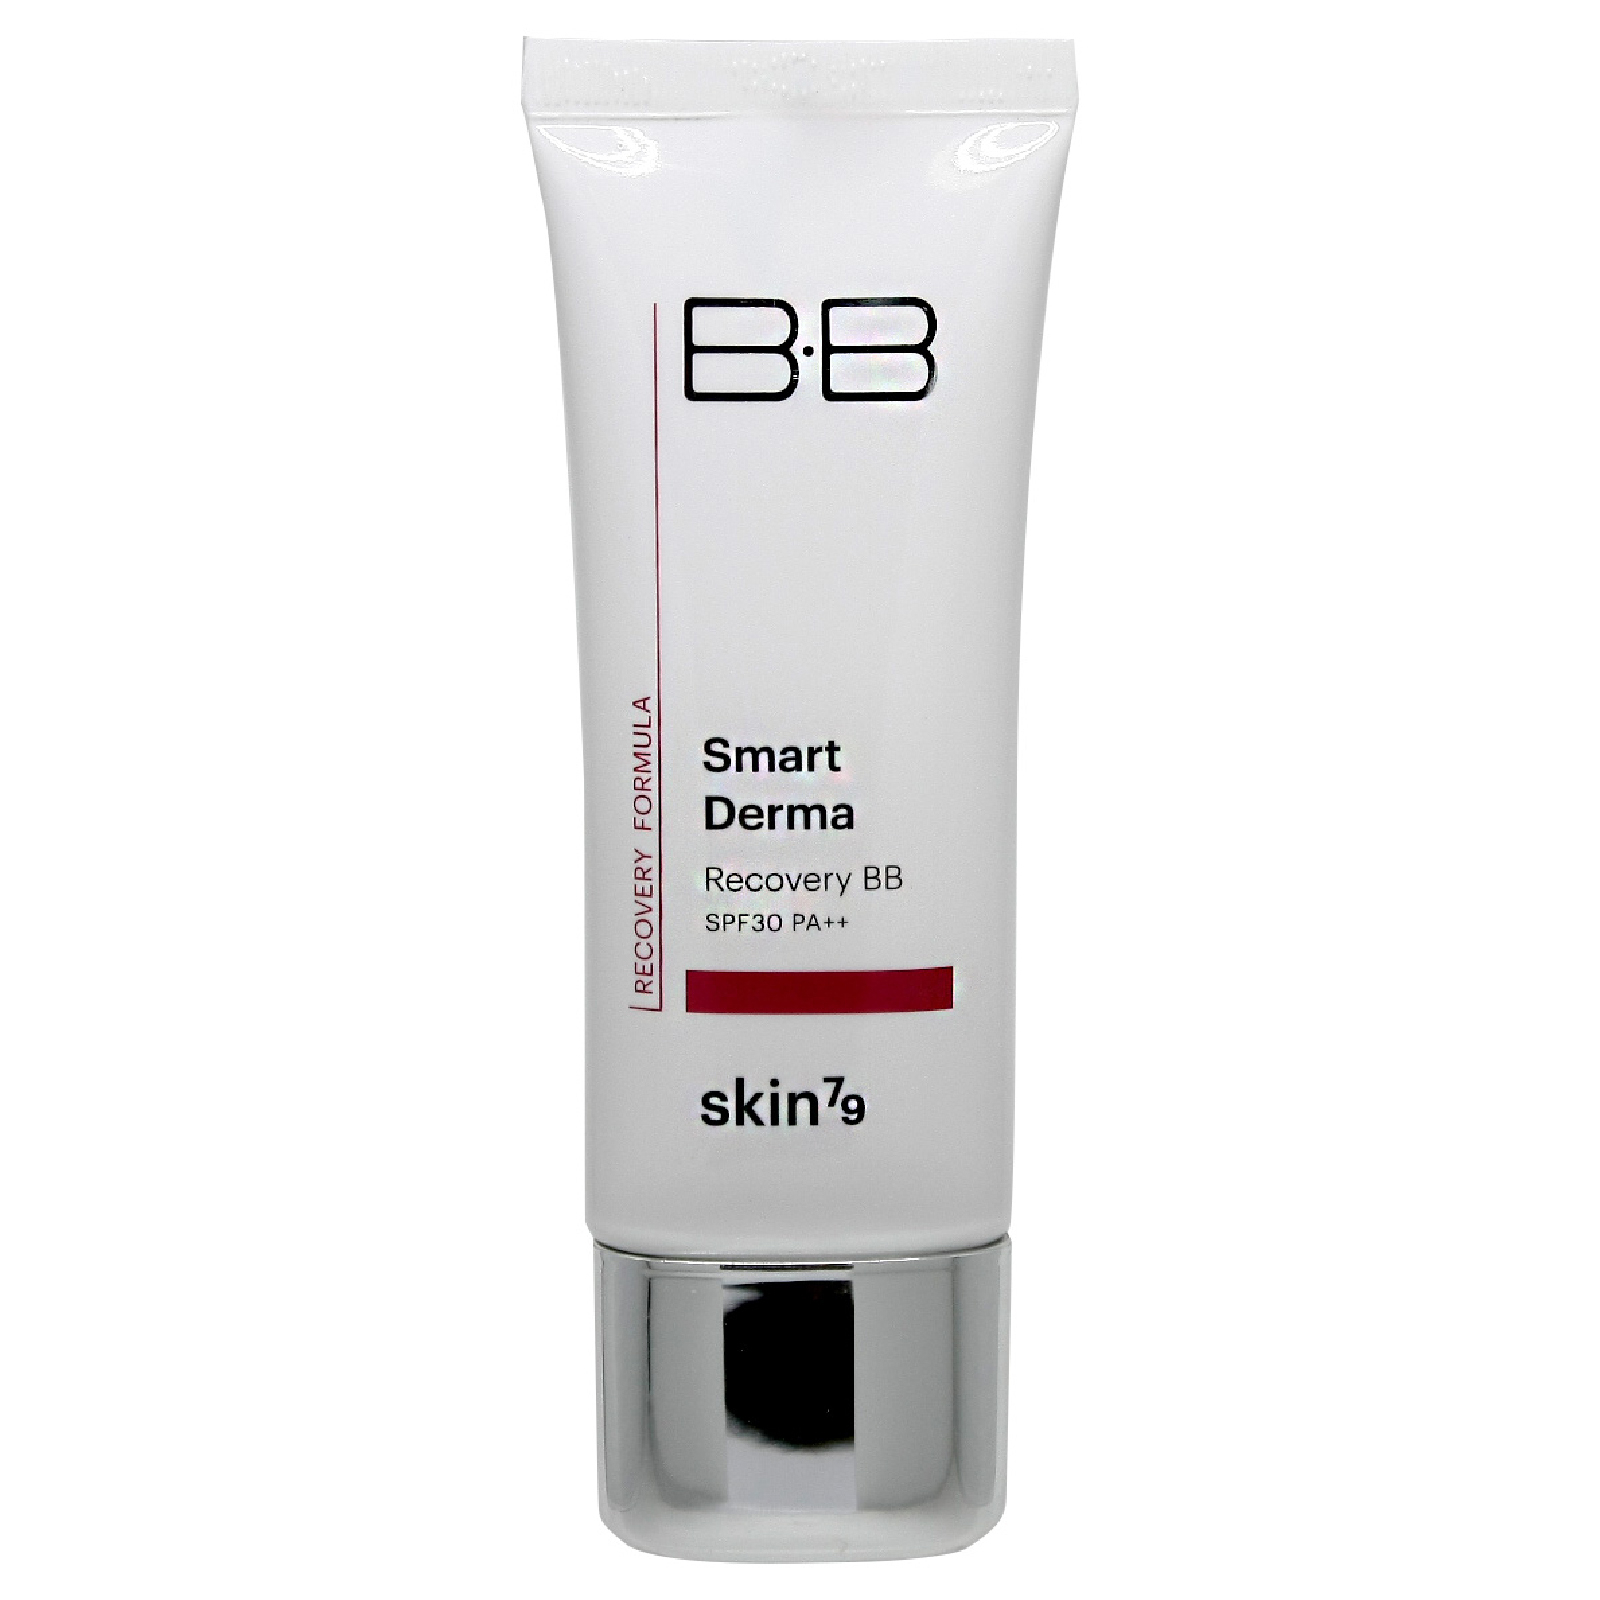 Crema BB Smart Derma Mild R (Recovery) con FPS 30 PA++ de Skin79 40 ml